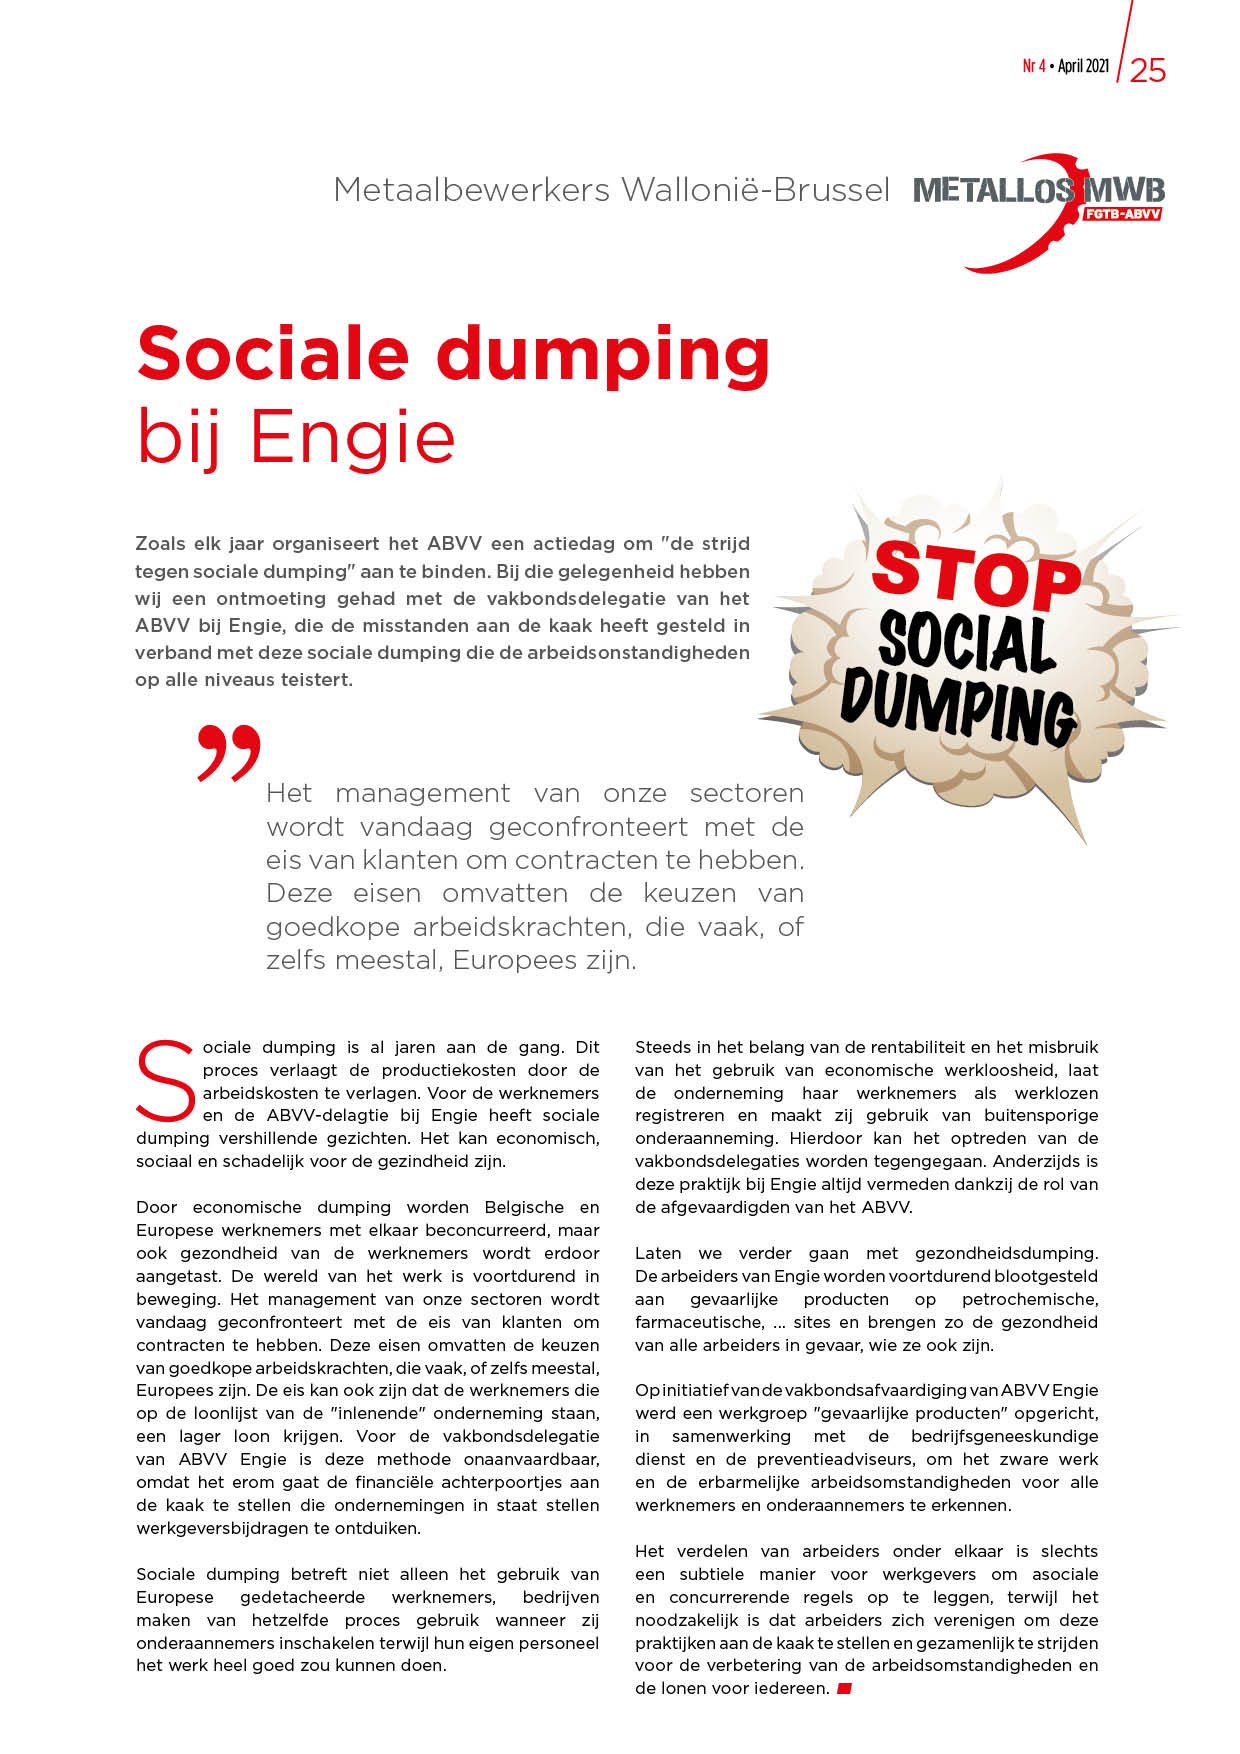 Sociale dumping bij Engie